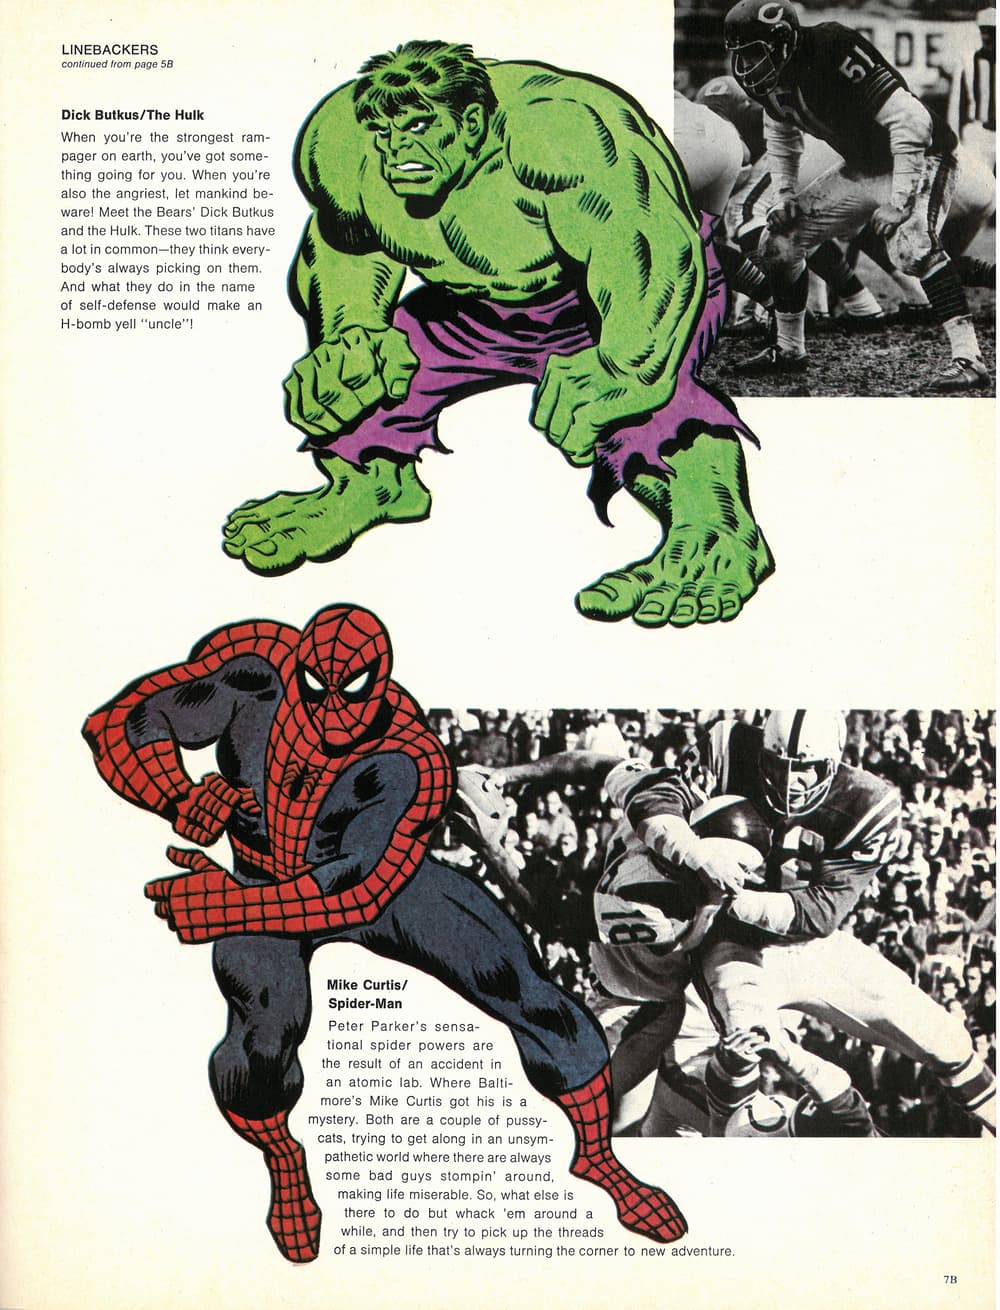 Marvel x NFL - Hulk and Spider-Man